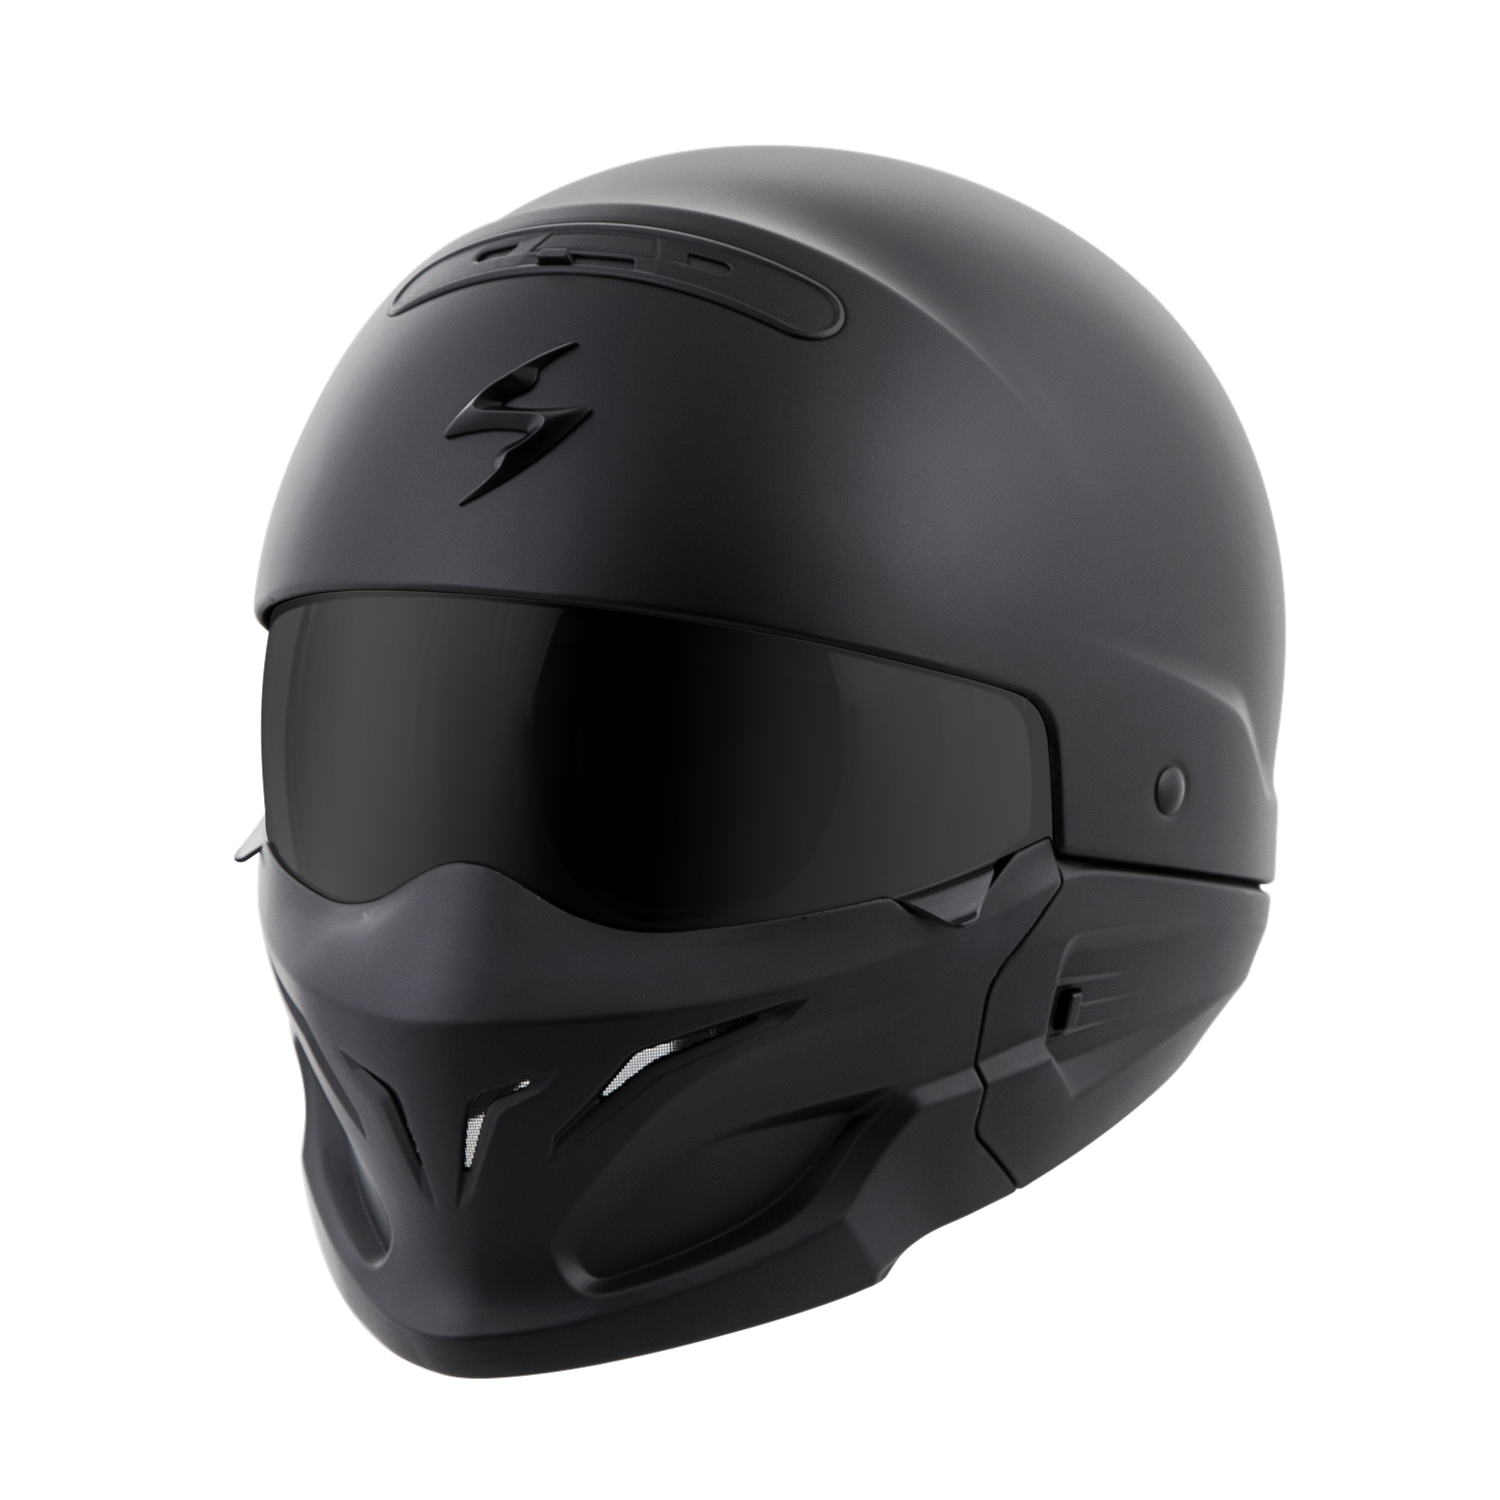 Black Helmet PNG Picture